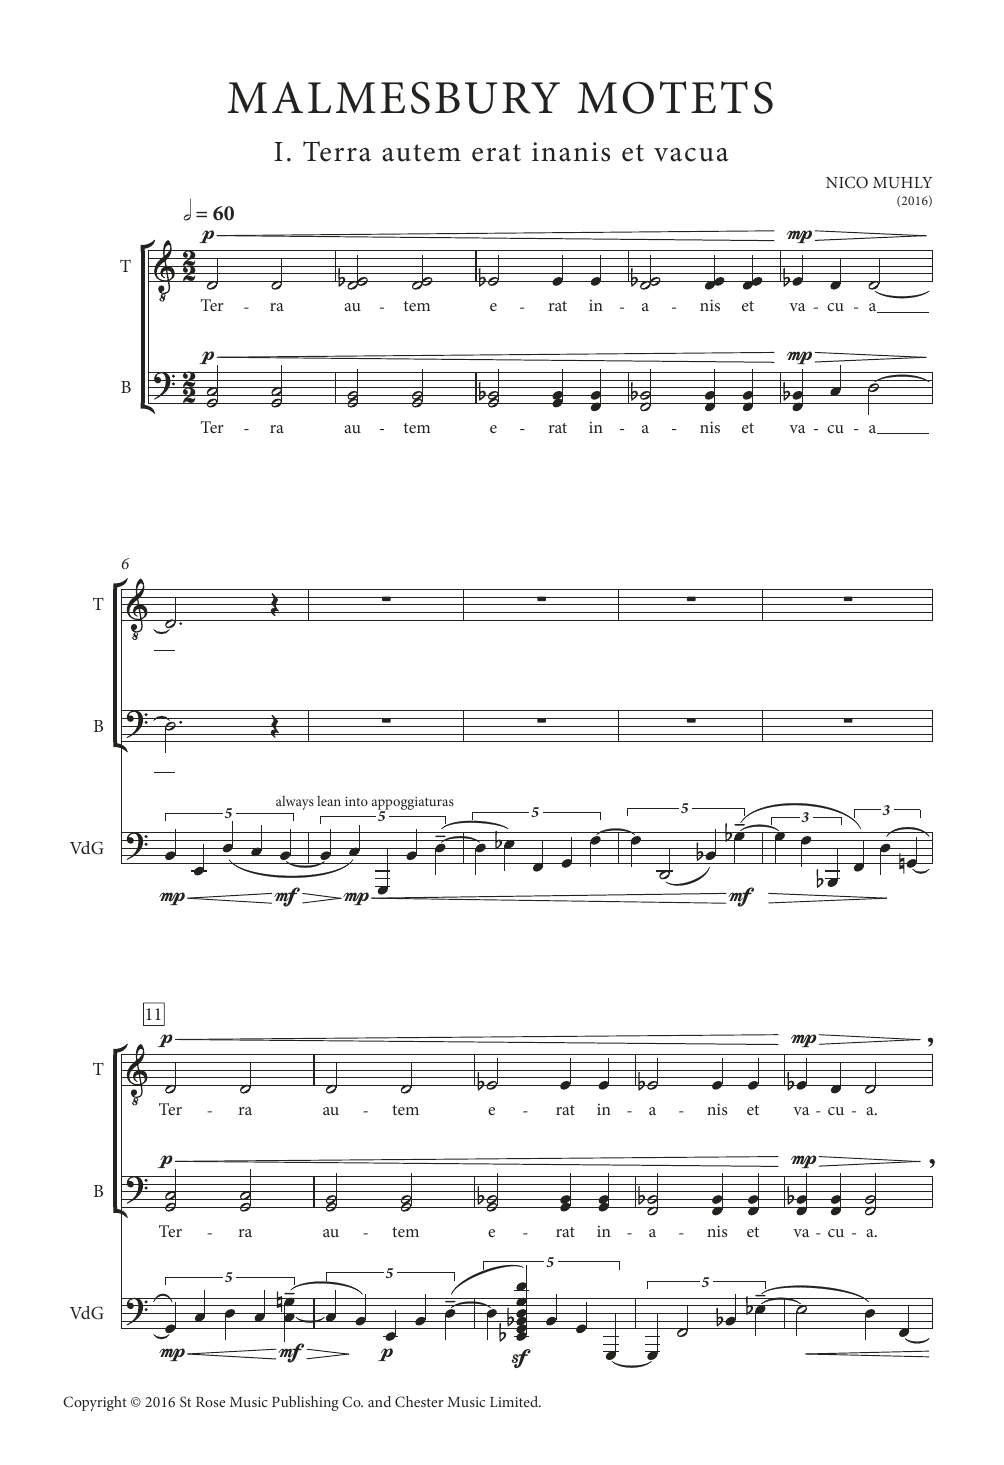 Nico Muhly Malmesbury Motets Sheet Music Notes & Chords for SATB - Download or Print PDF